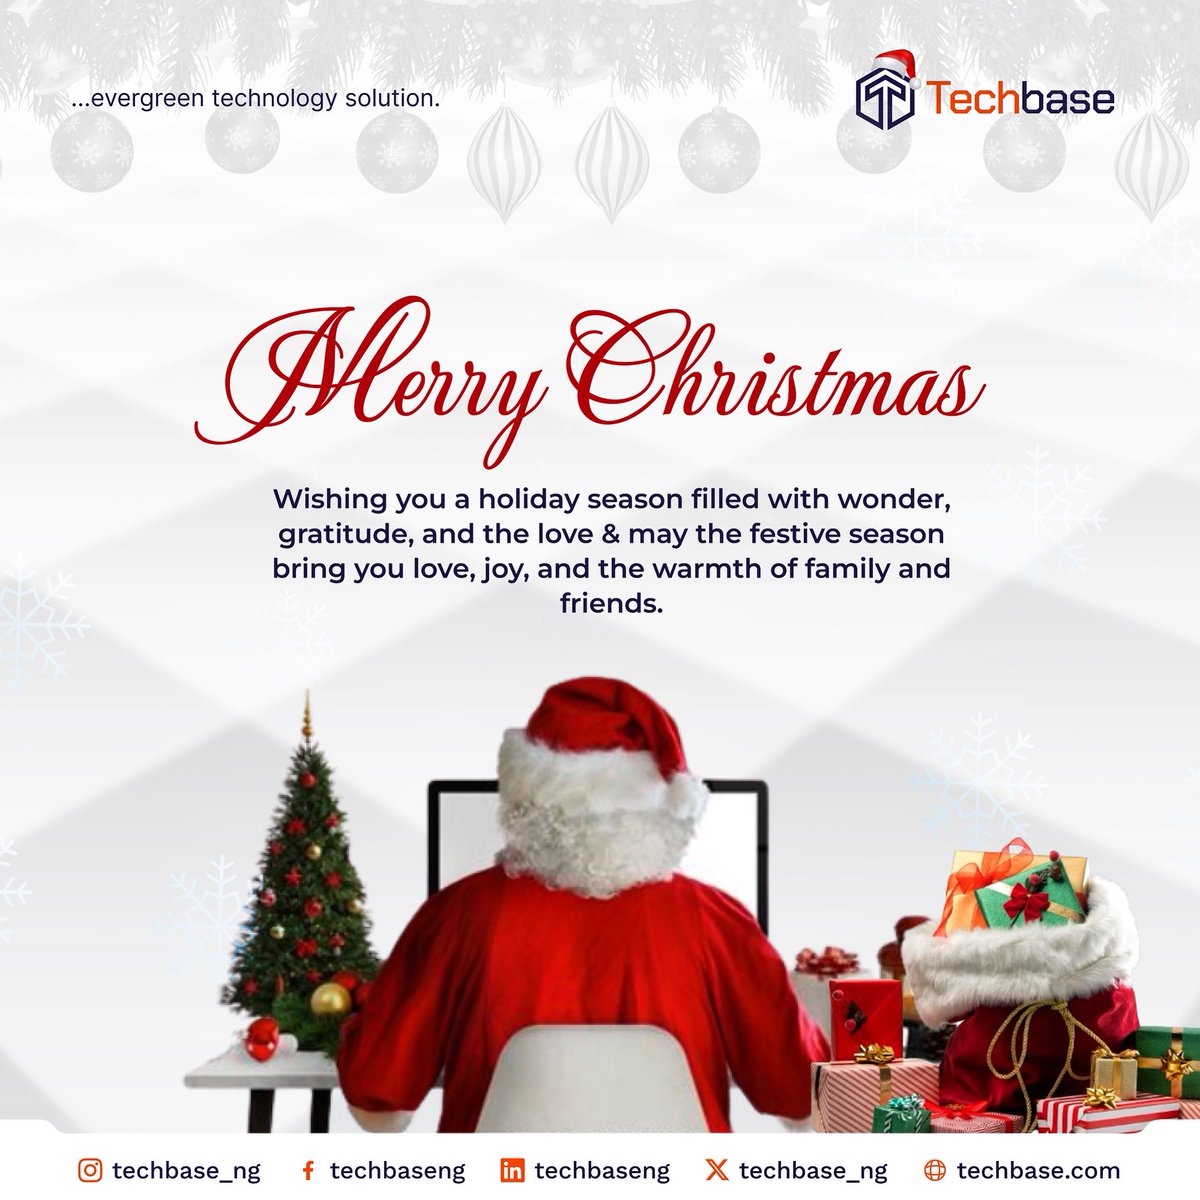 Merry Christmas! Wishing you joy, peace, and warmth during this festive season.

#merryxmas🎄 #christmasseason #techbase #techbaseng #techbasenigeria